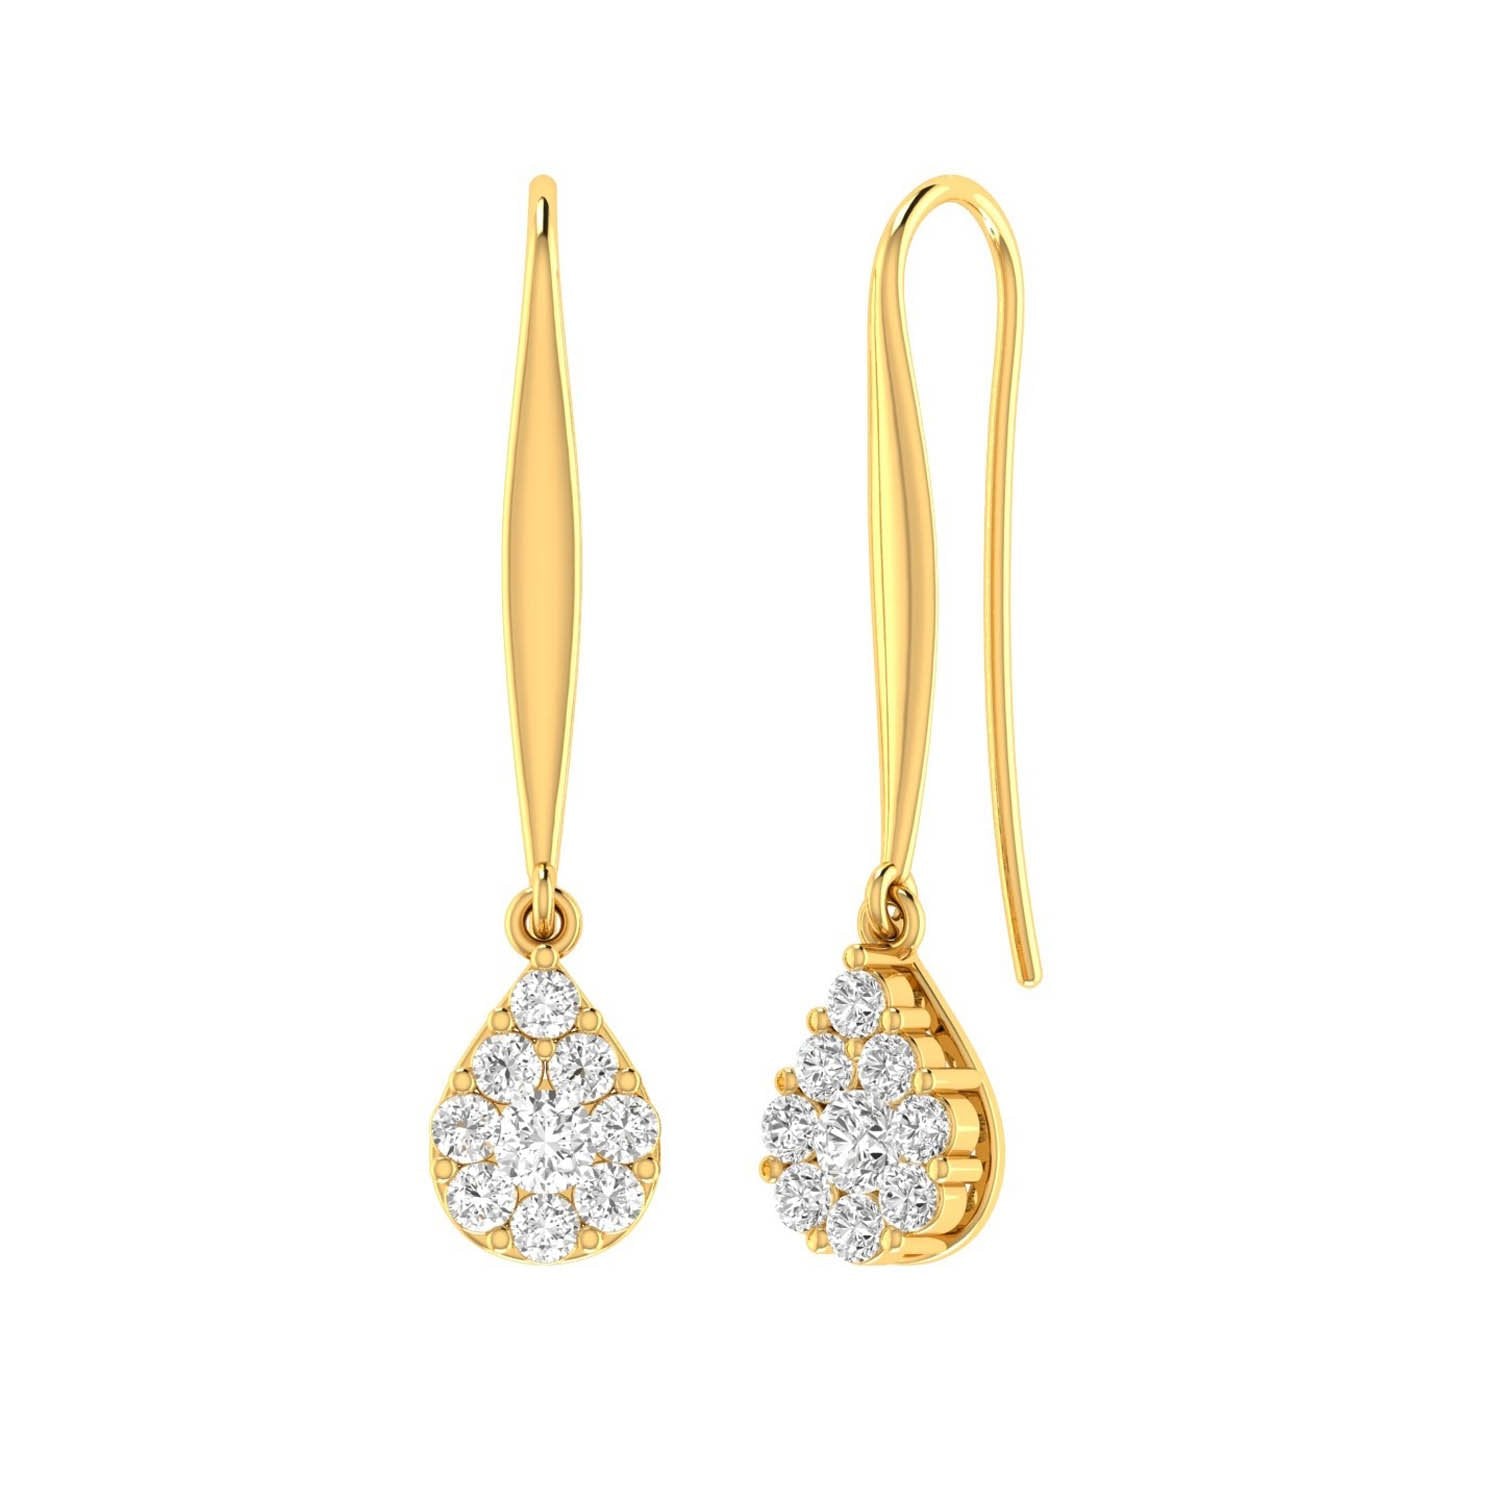 Tear Drop Hook Diamond Earrings with 0.25ct Diamonds in 9K Yellow Gold - 9YTDSH25GH